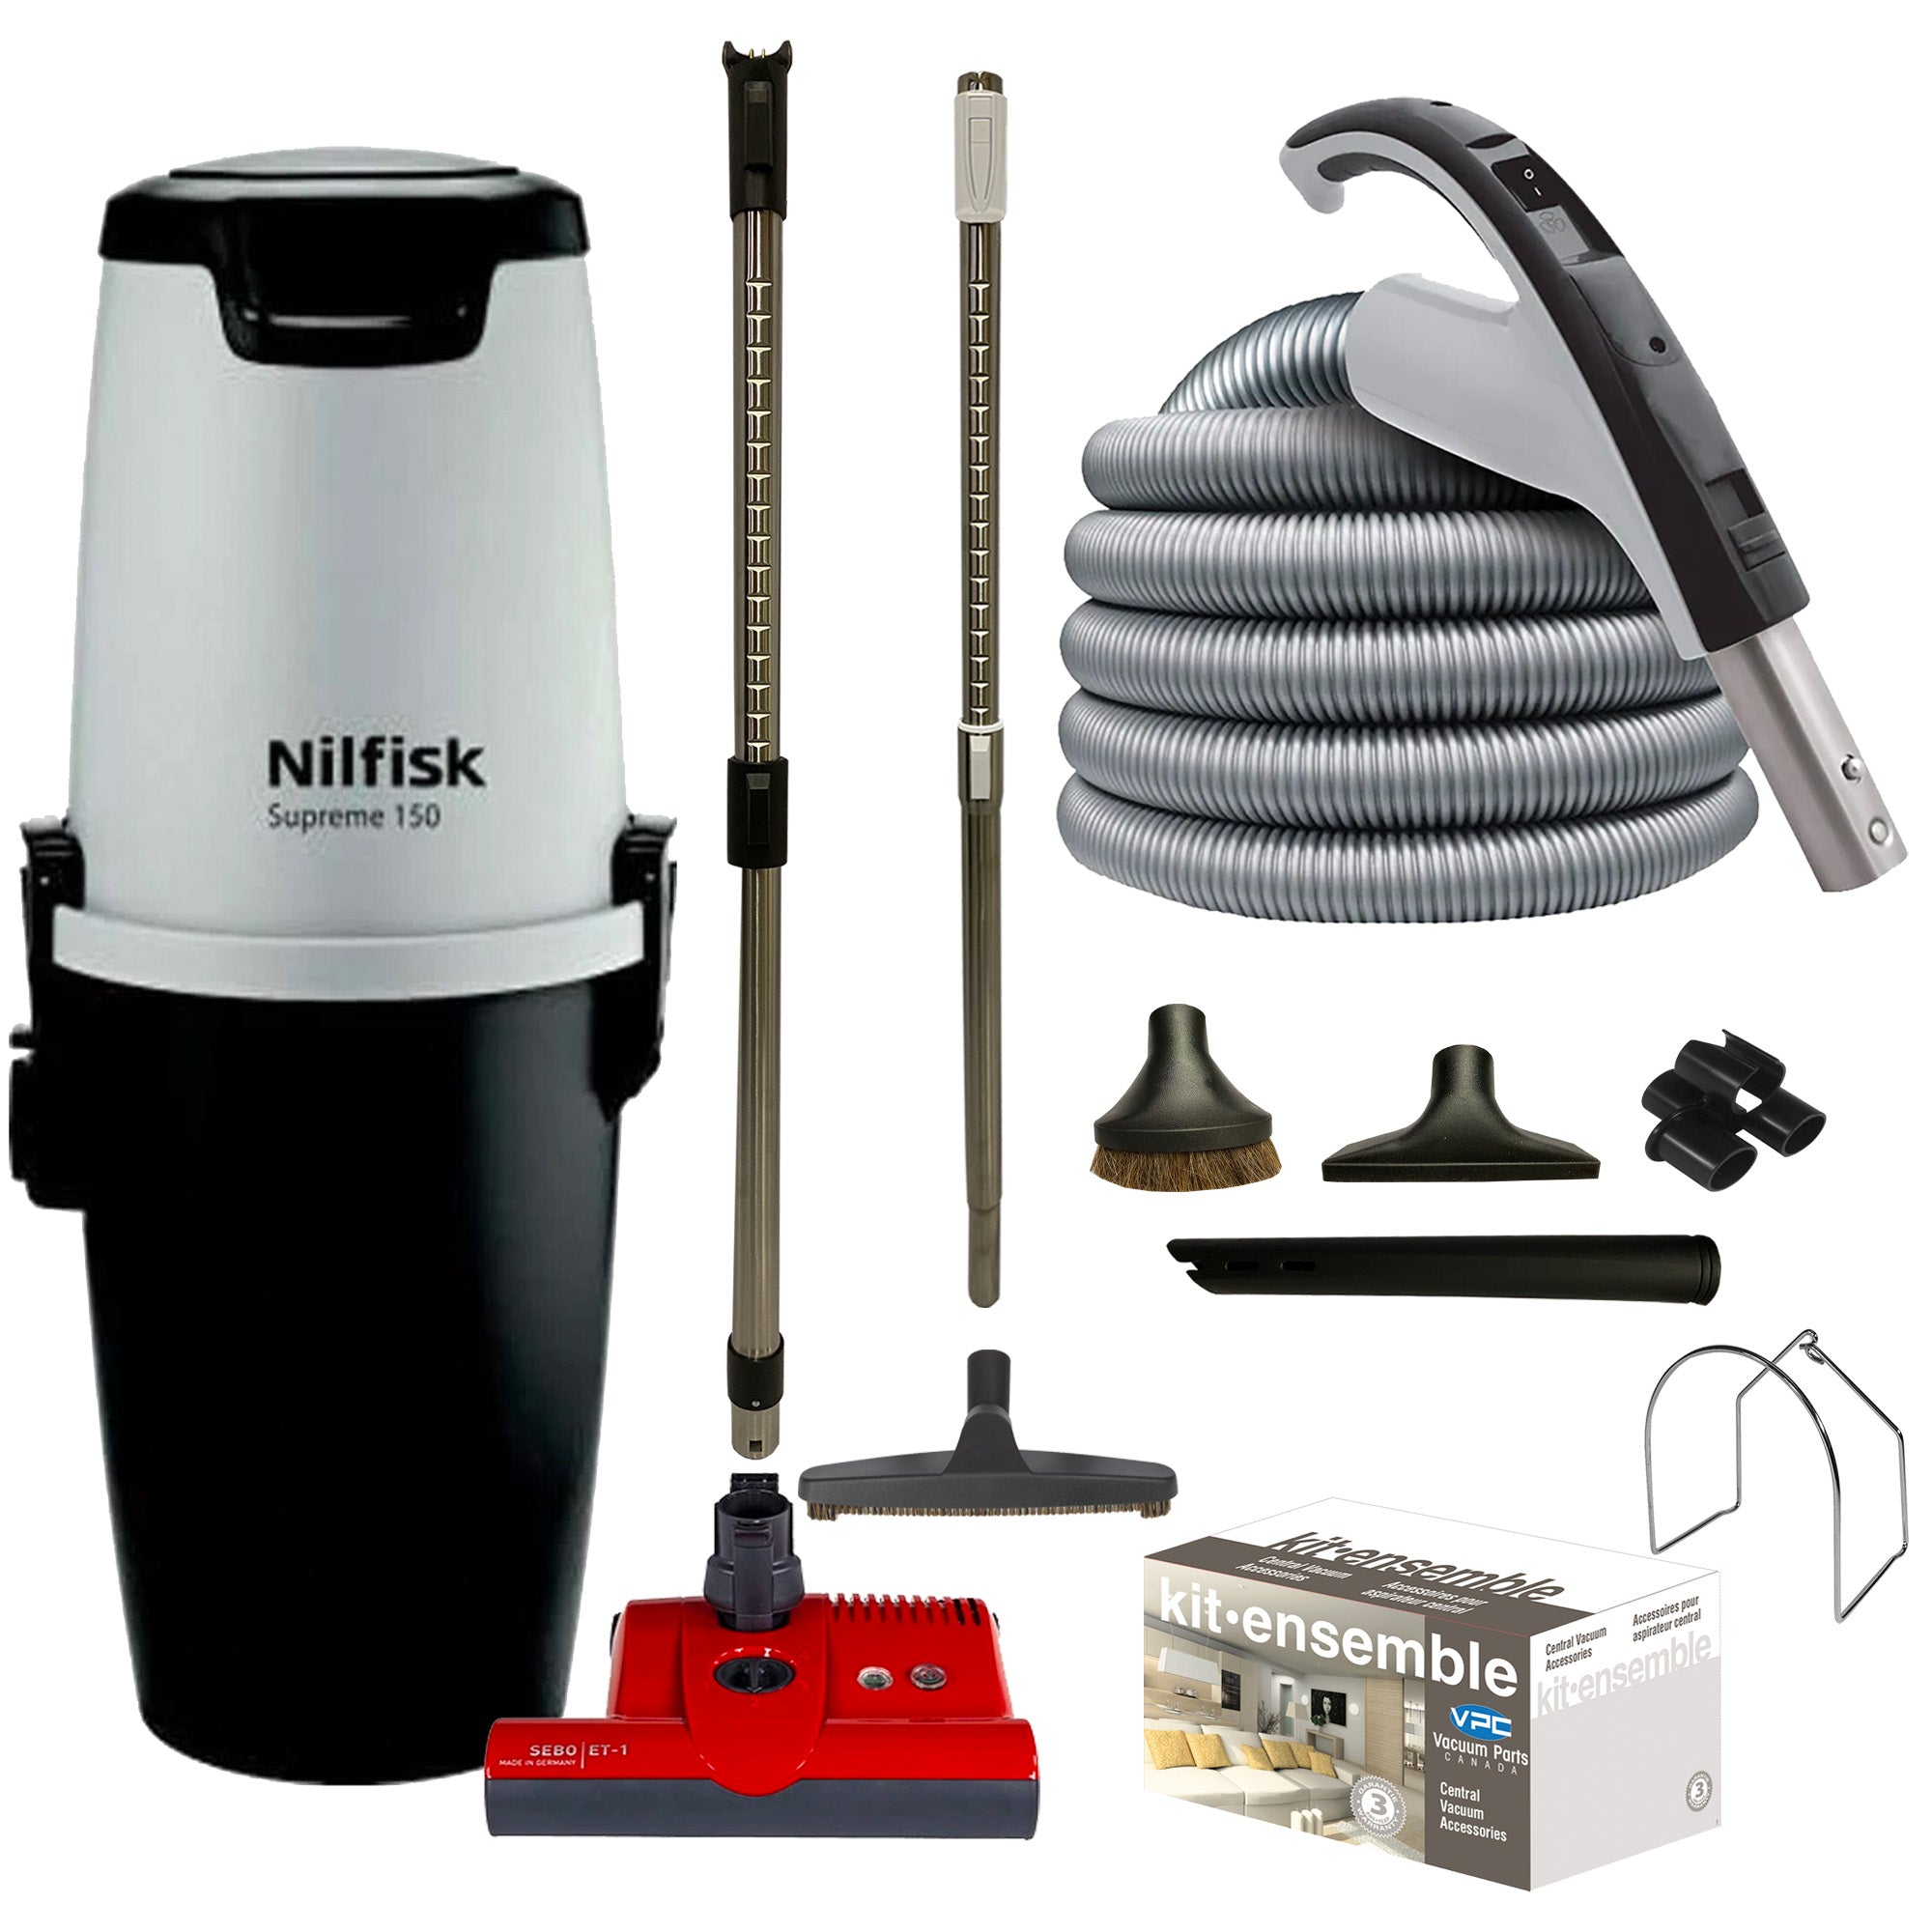 Nilfisk Supreme 150 Central Vacuum with SEBO Premium Electric Kit